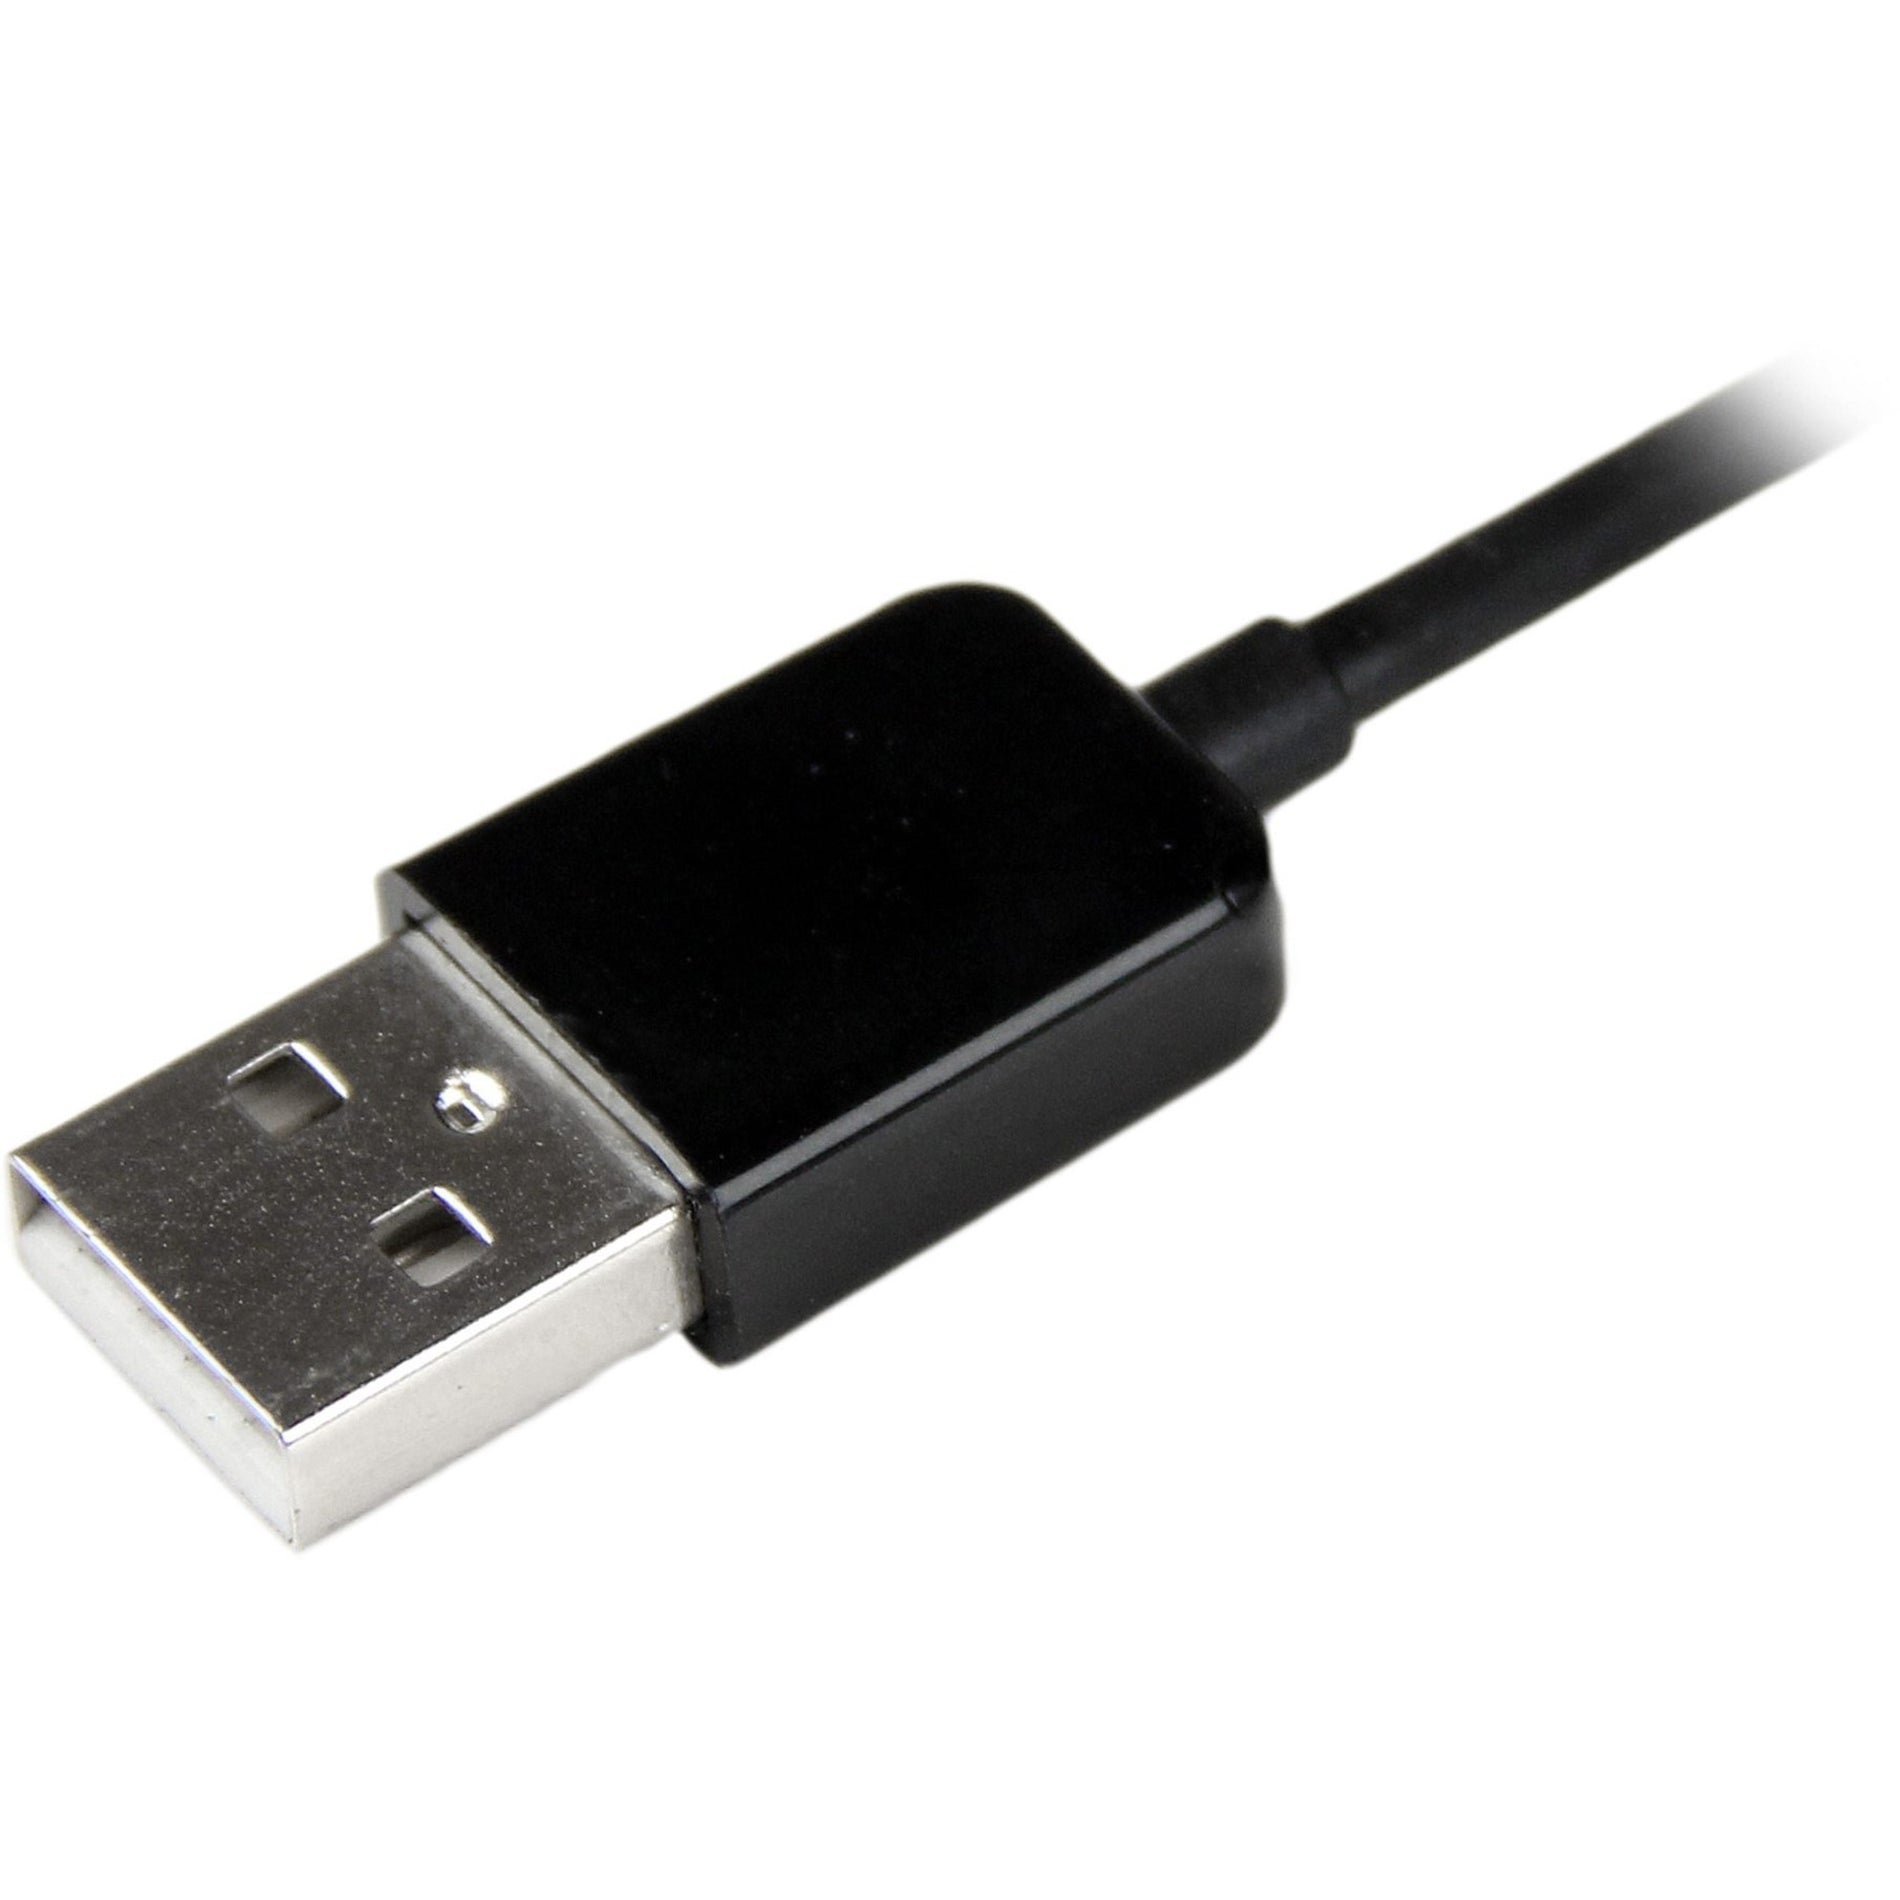 StarTech.com ICUSBAUDIO2D USB Stereo Audio Adapter External Sound Card with SPDIF Digital Audio, 5.1 Sound Channels, 24-bit DAC, 96 kHz Maximum Playback Sampling Rate